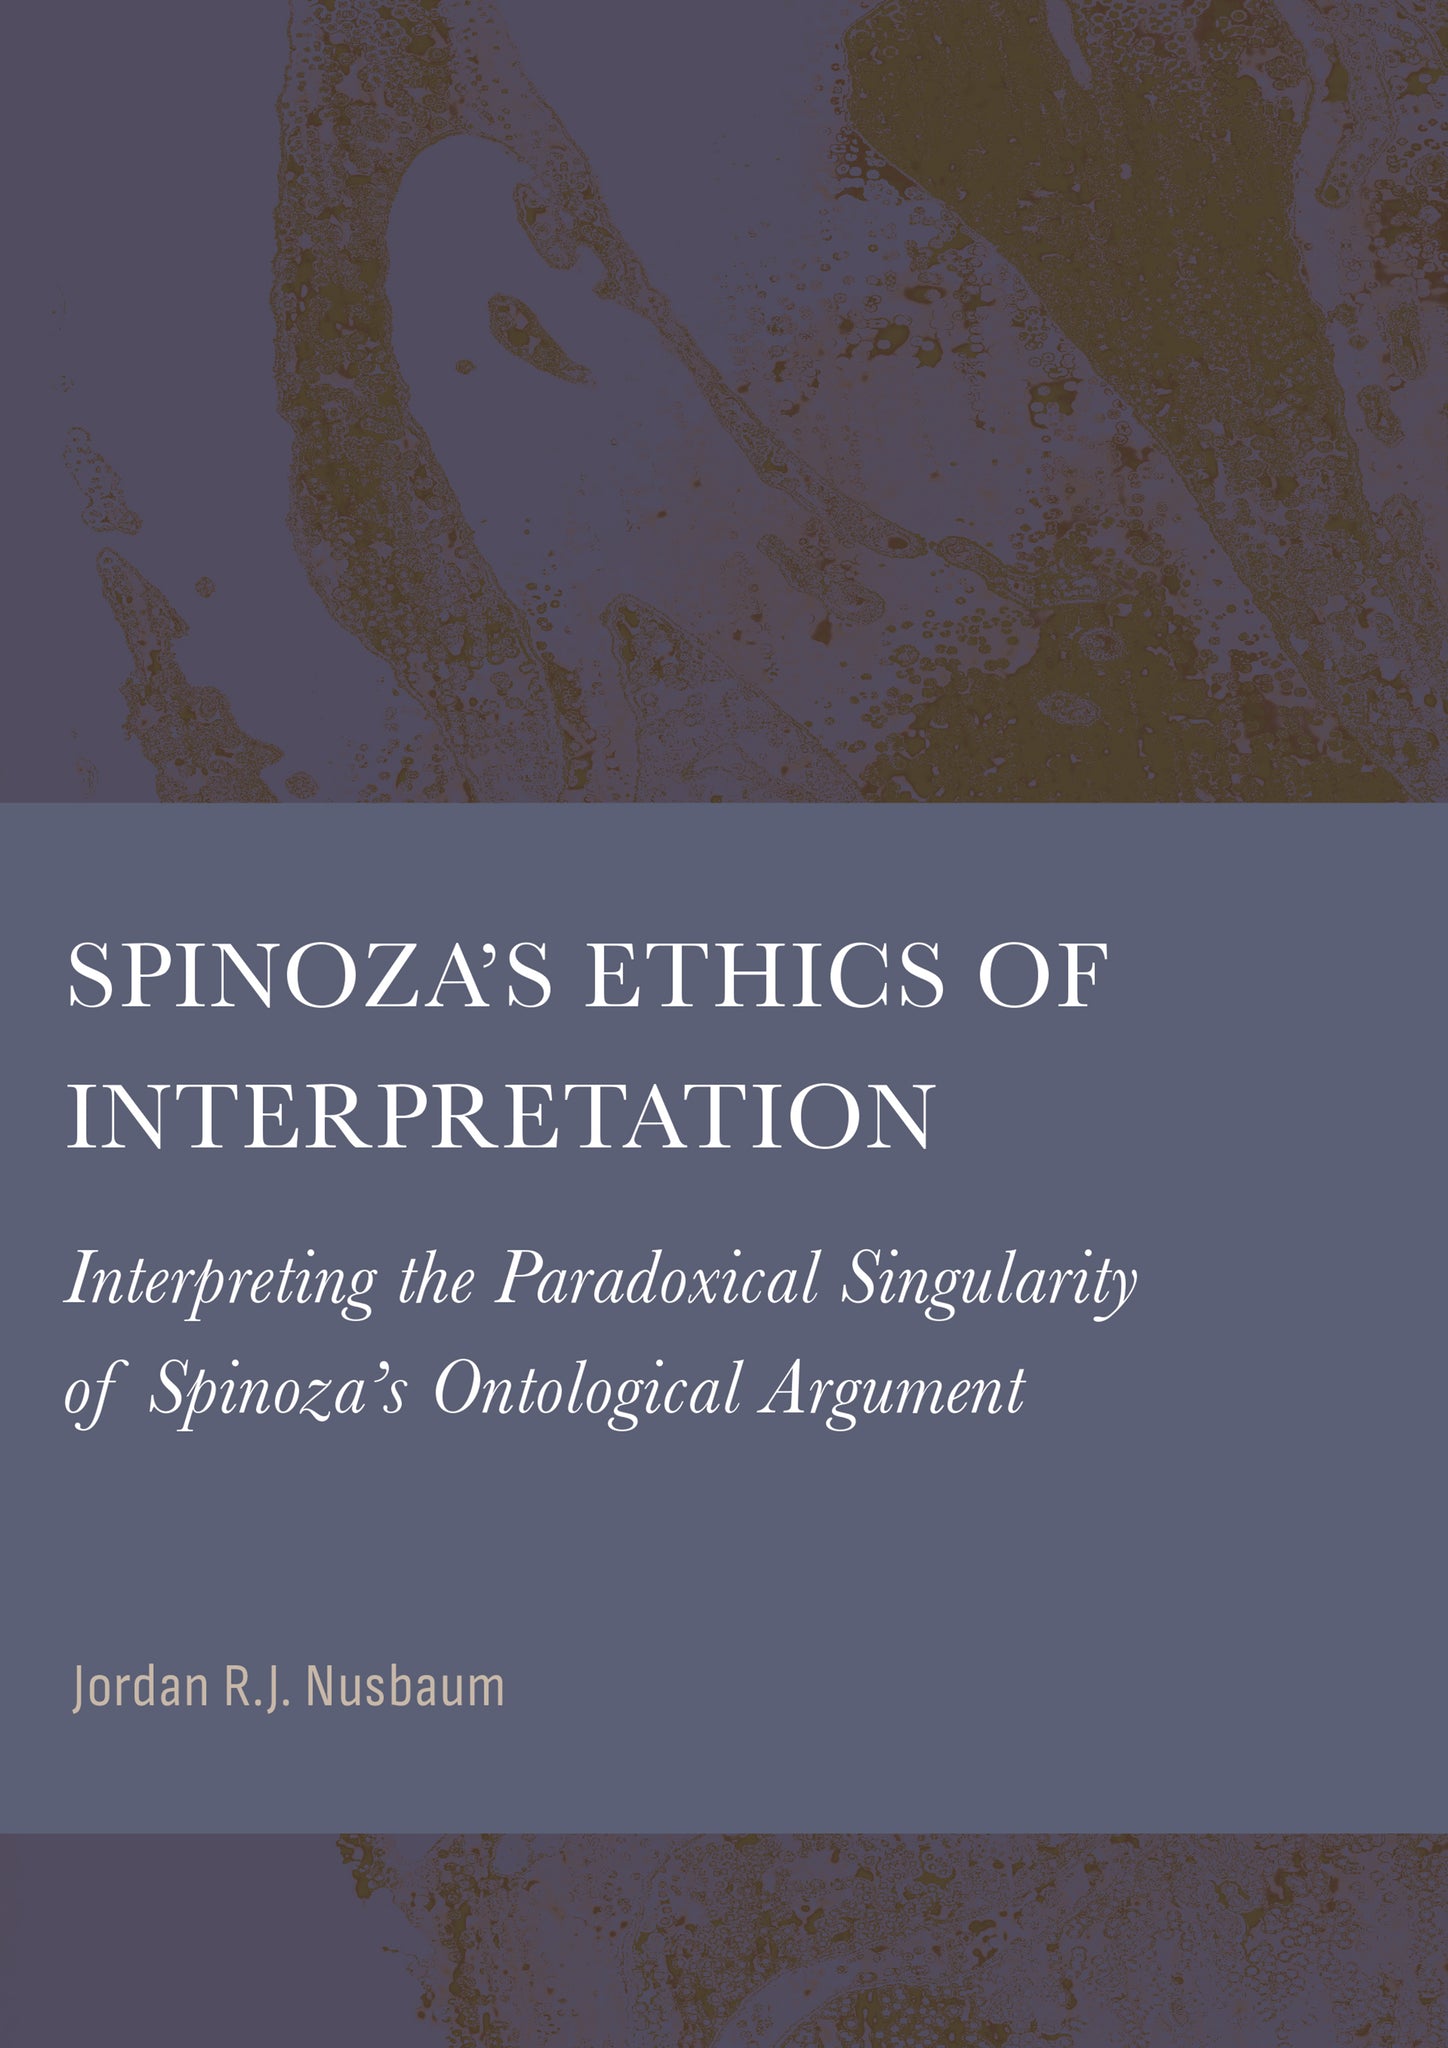 Spinoza’s Ethics of Interpretation: Interpreting the Paradoxical Singularity of Spinoza’s Ontological Argument